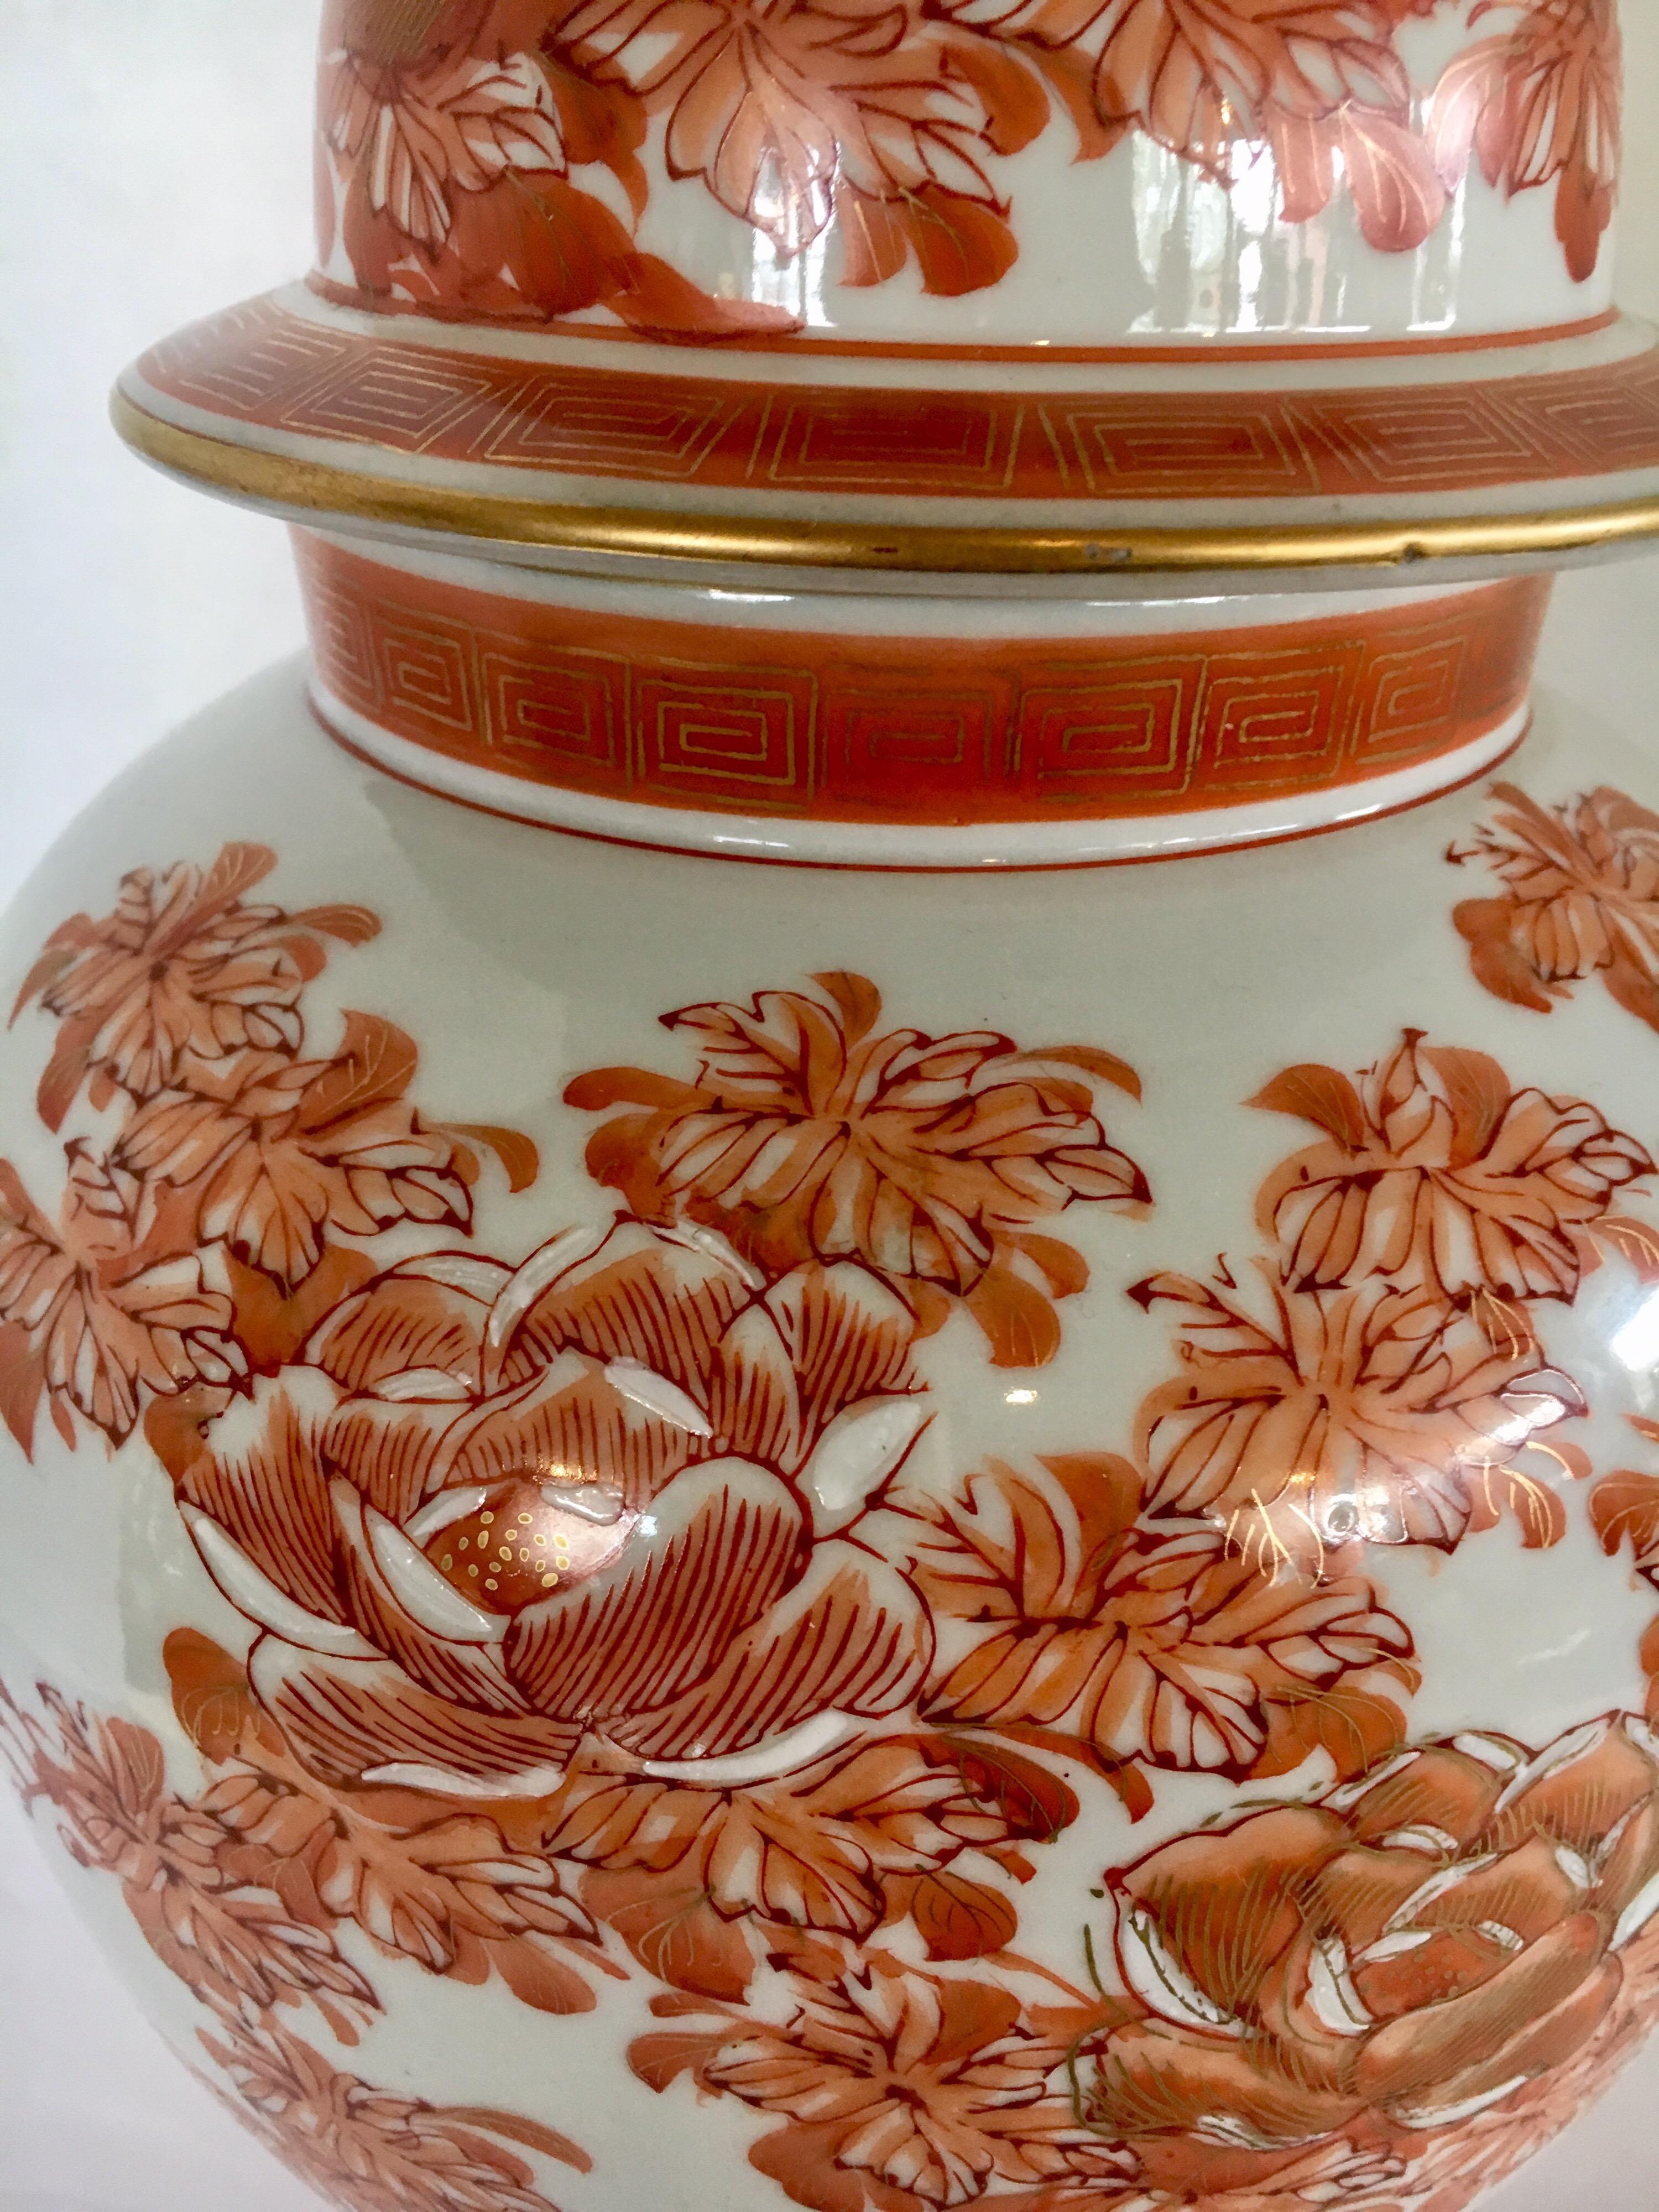 Mid-20th Century Japanese Orange and White Porcelain Ginger Jar Urn Vase